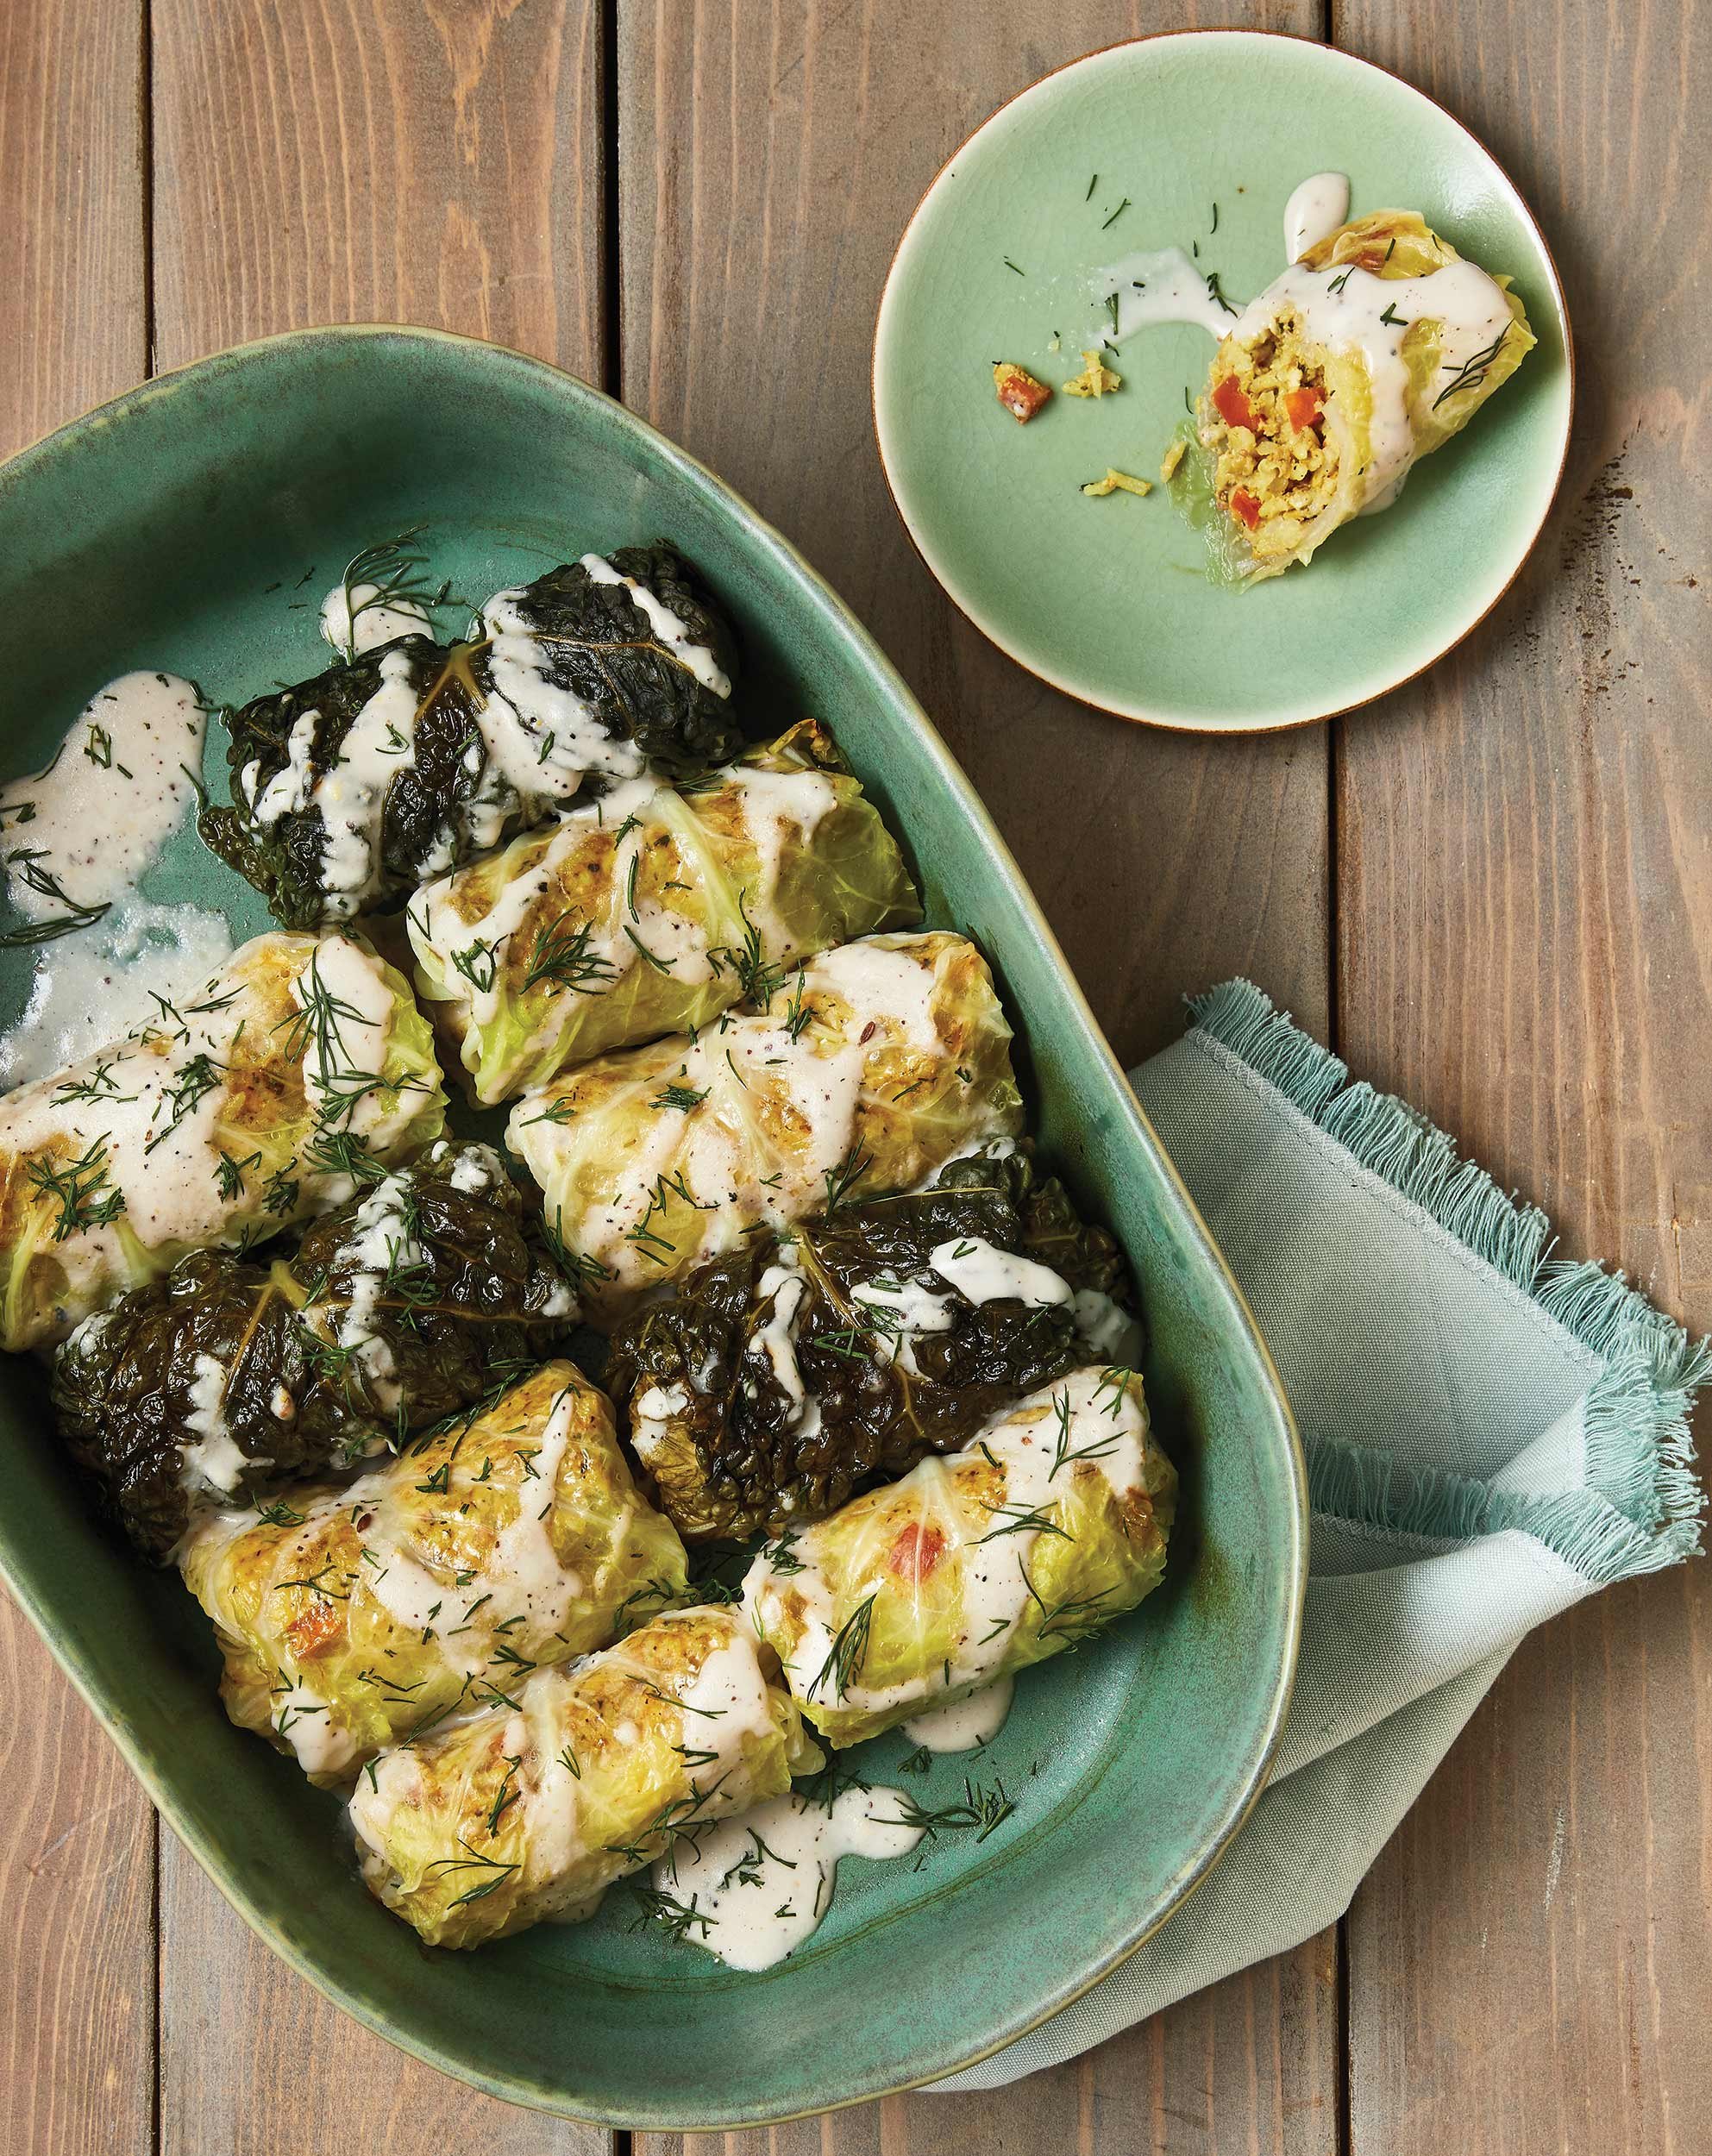 nyc-nj-cookbook-photographer-food-joy-of-balance-divya-alter-stuffed-cabbage-rolls.jpg